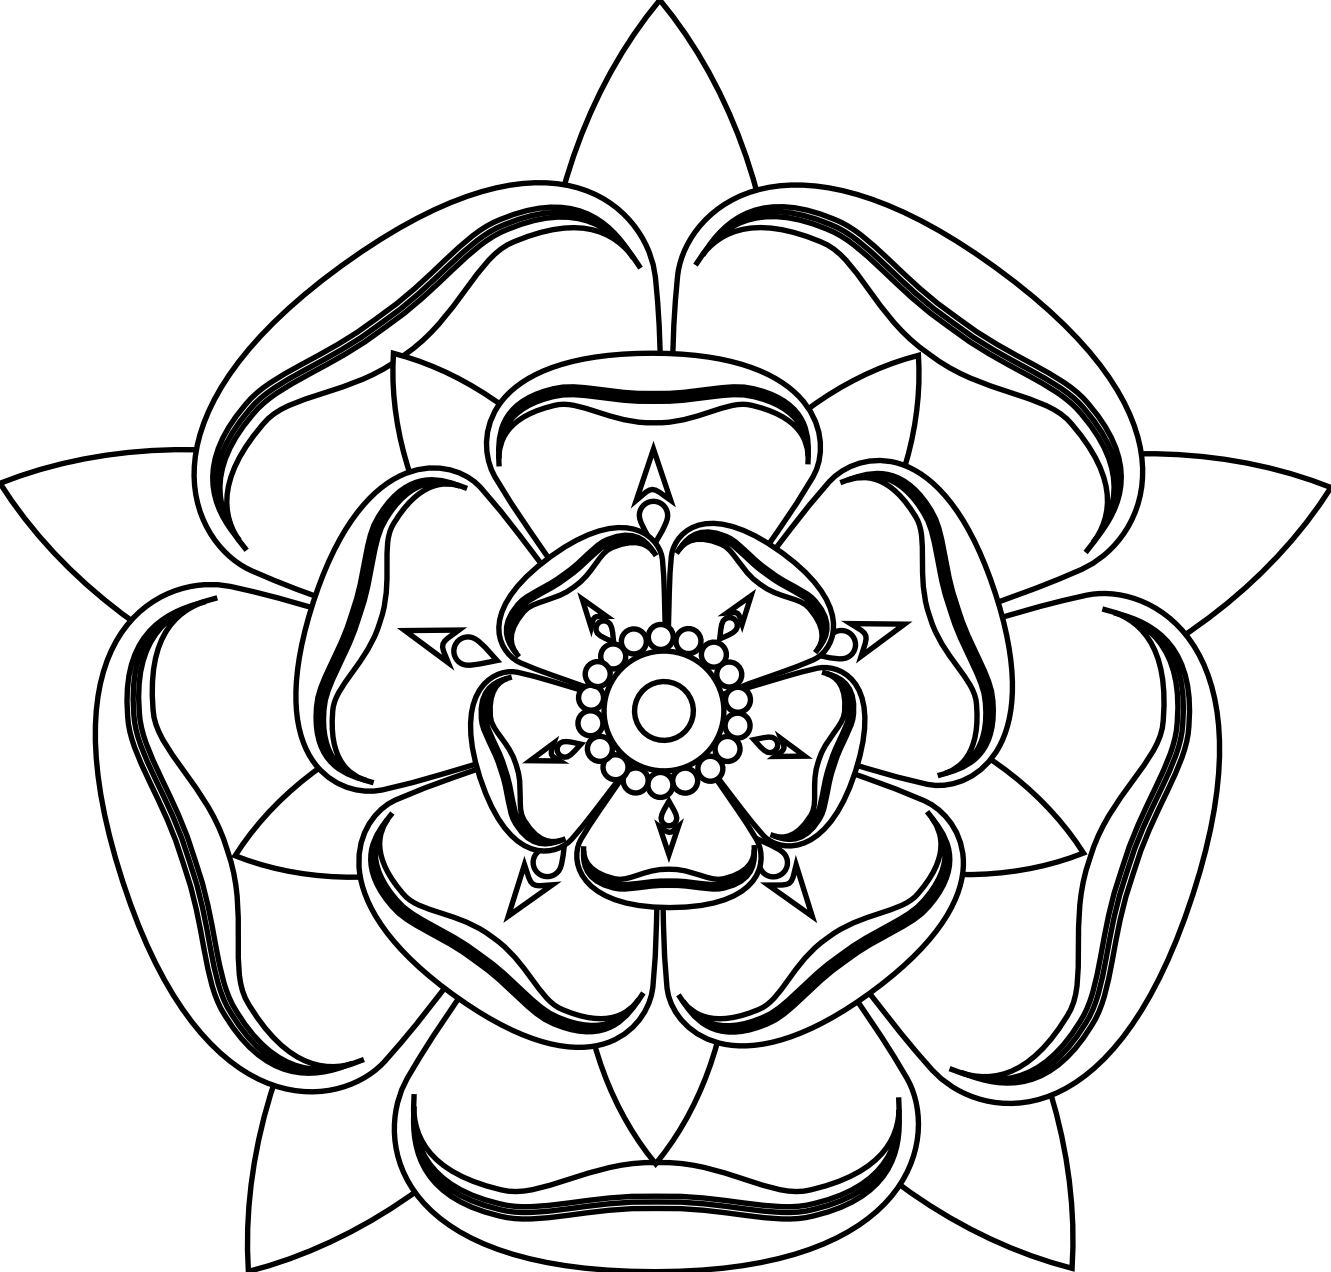 tudor rose tattoo | Tudor rose tattoos, Yorkshire rose ... - Black and White Rose Tattoos